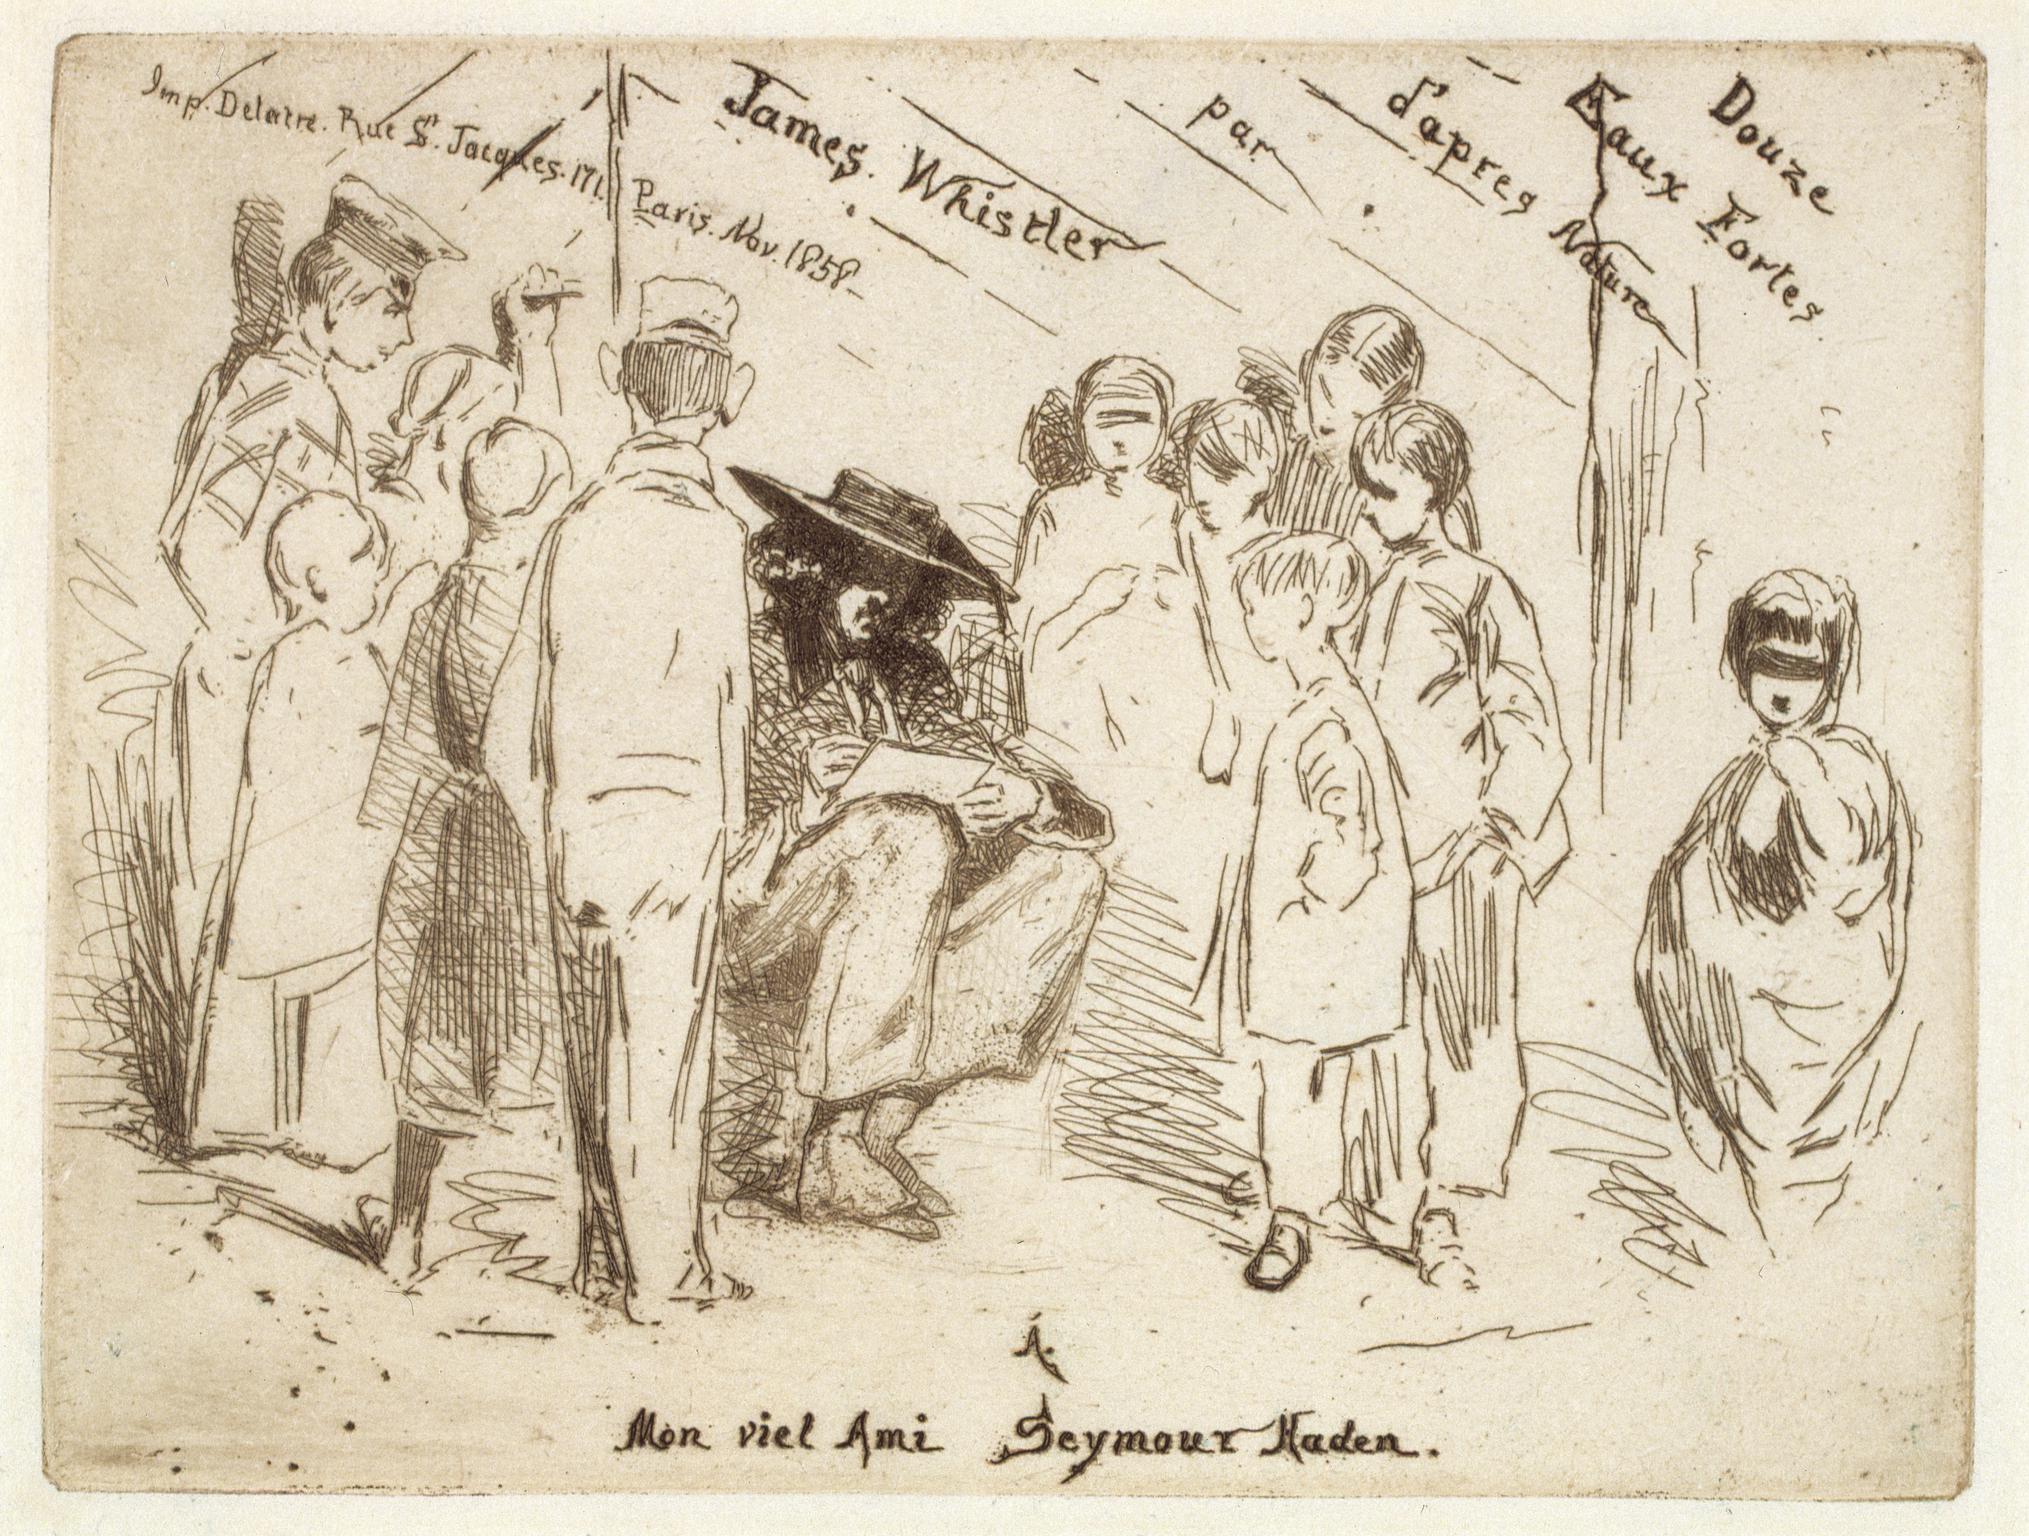 James Whistler sketching in France